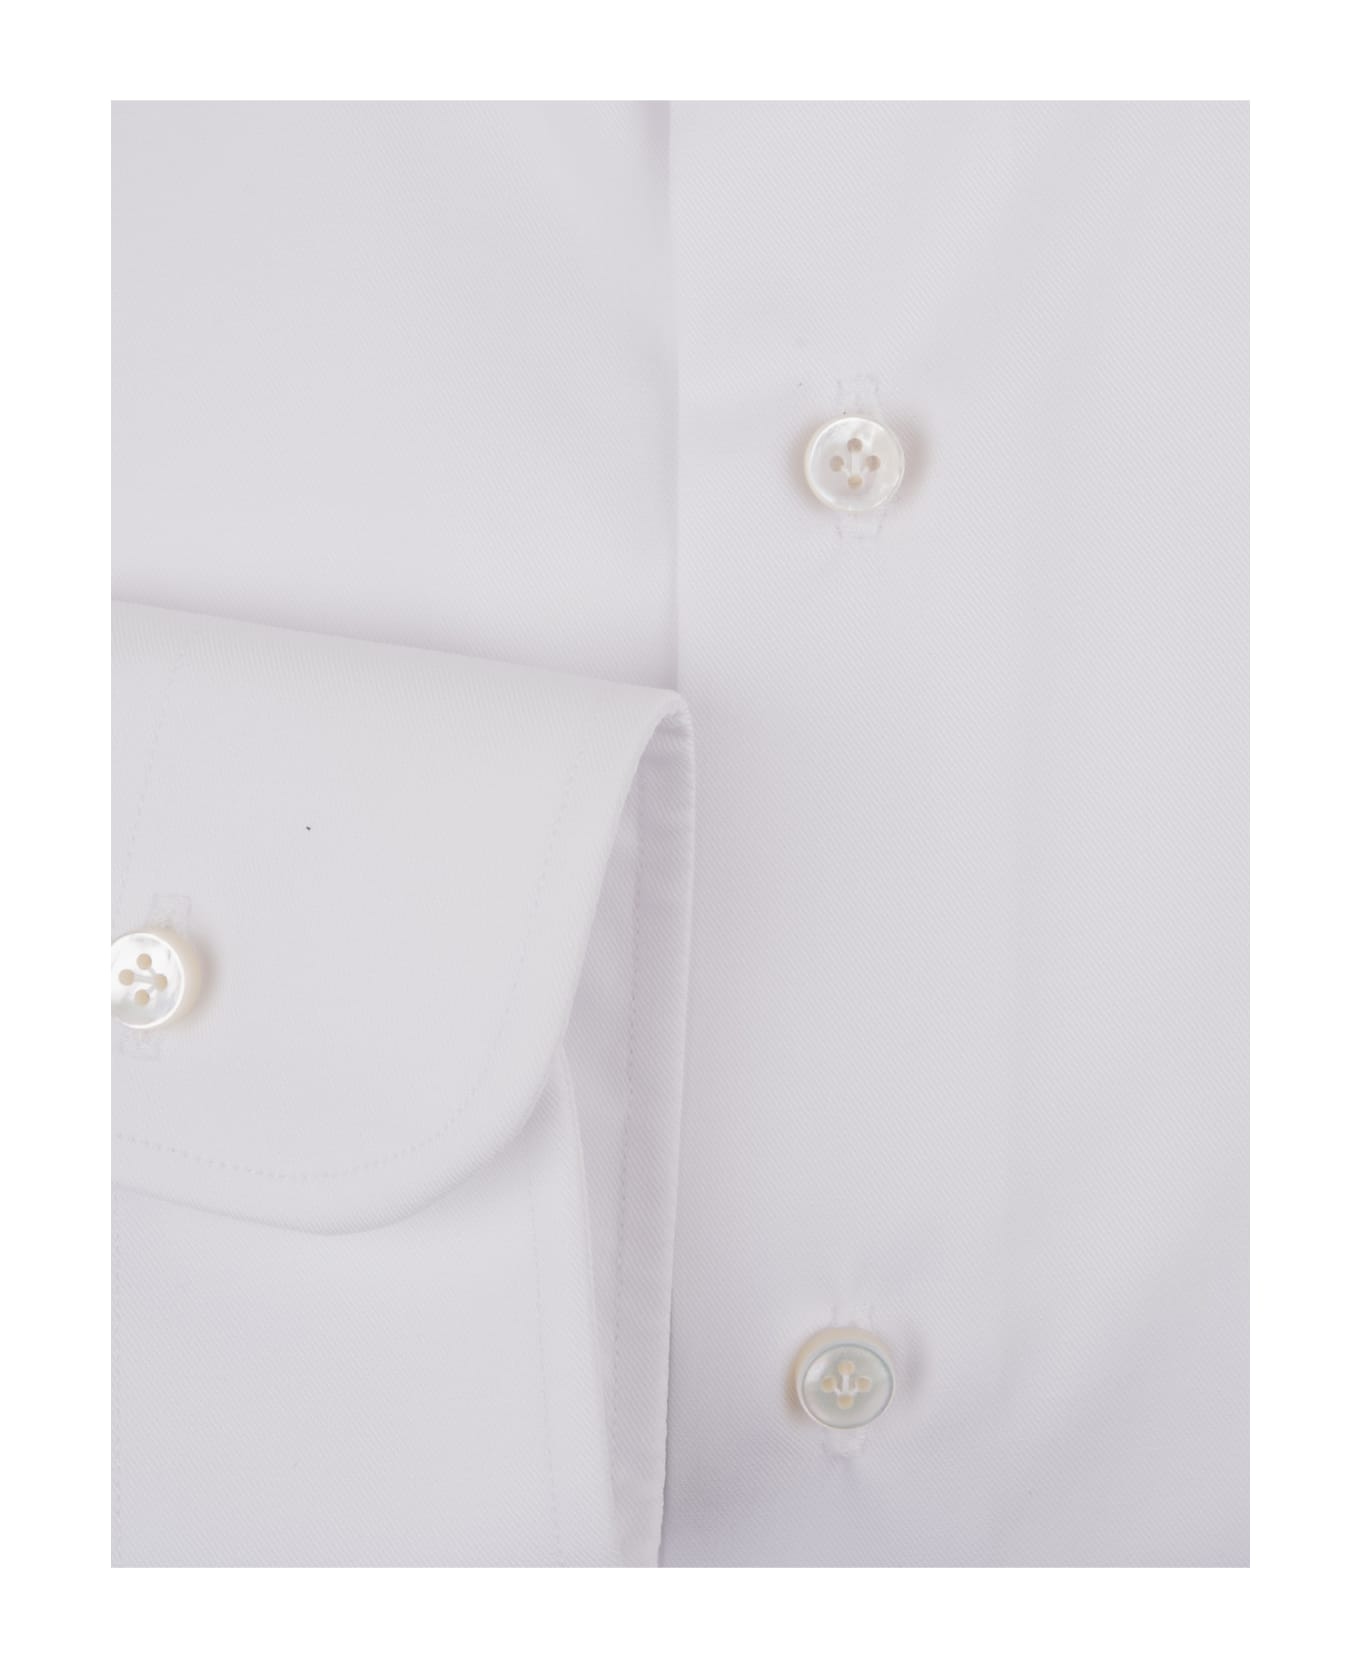 Barba Napoli Slim Fit Shirt In White Cotton - White